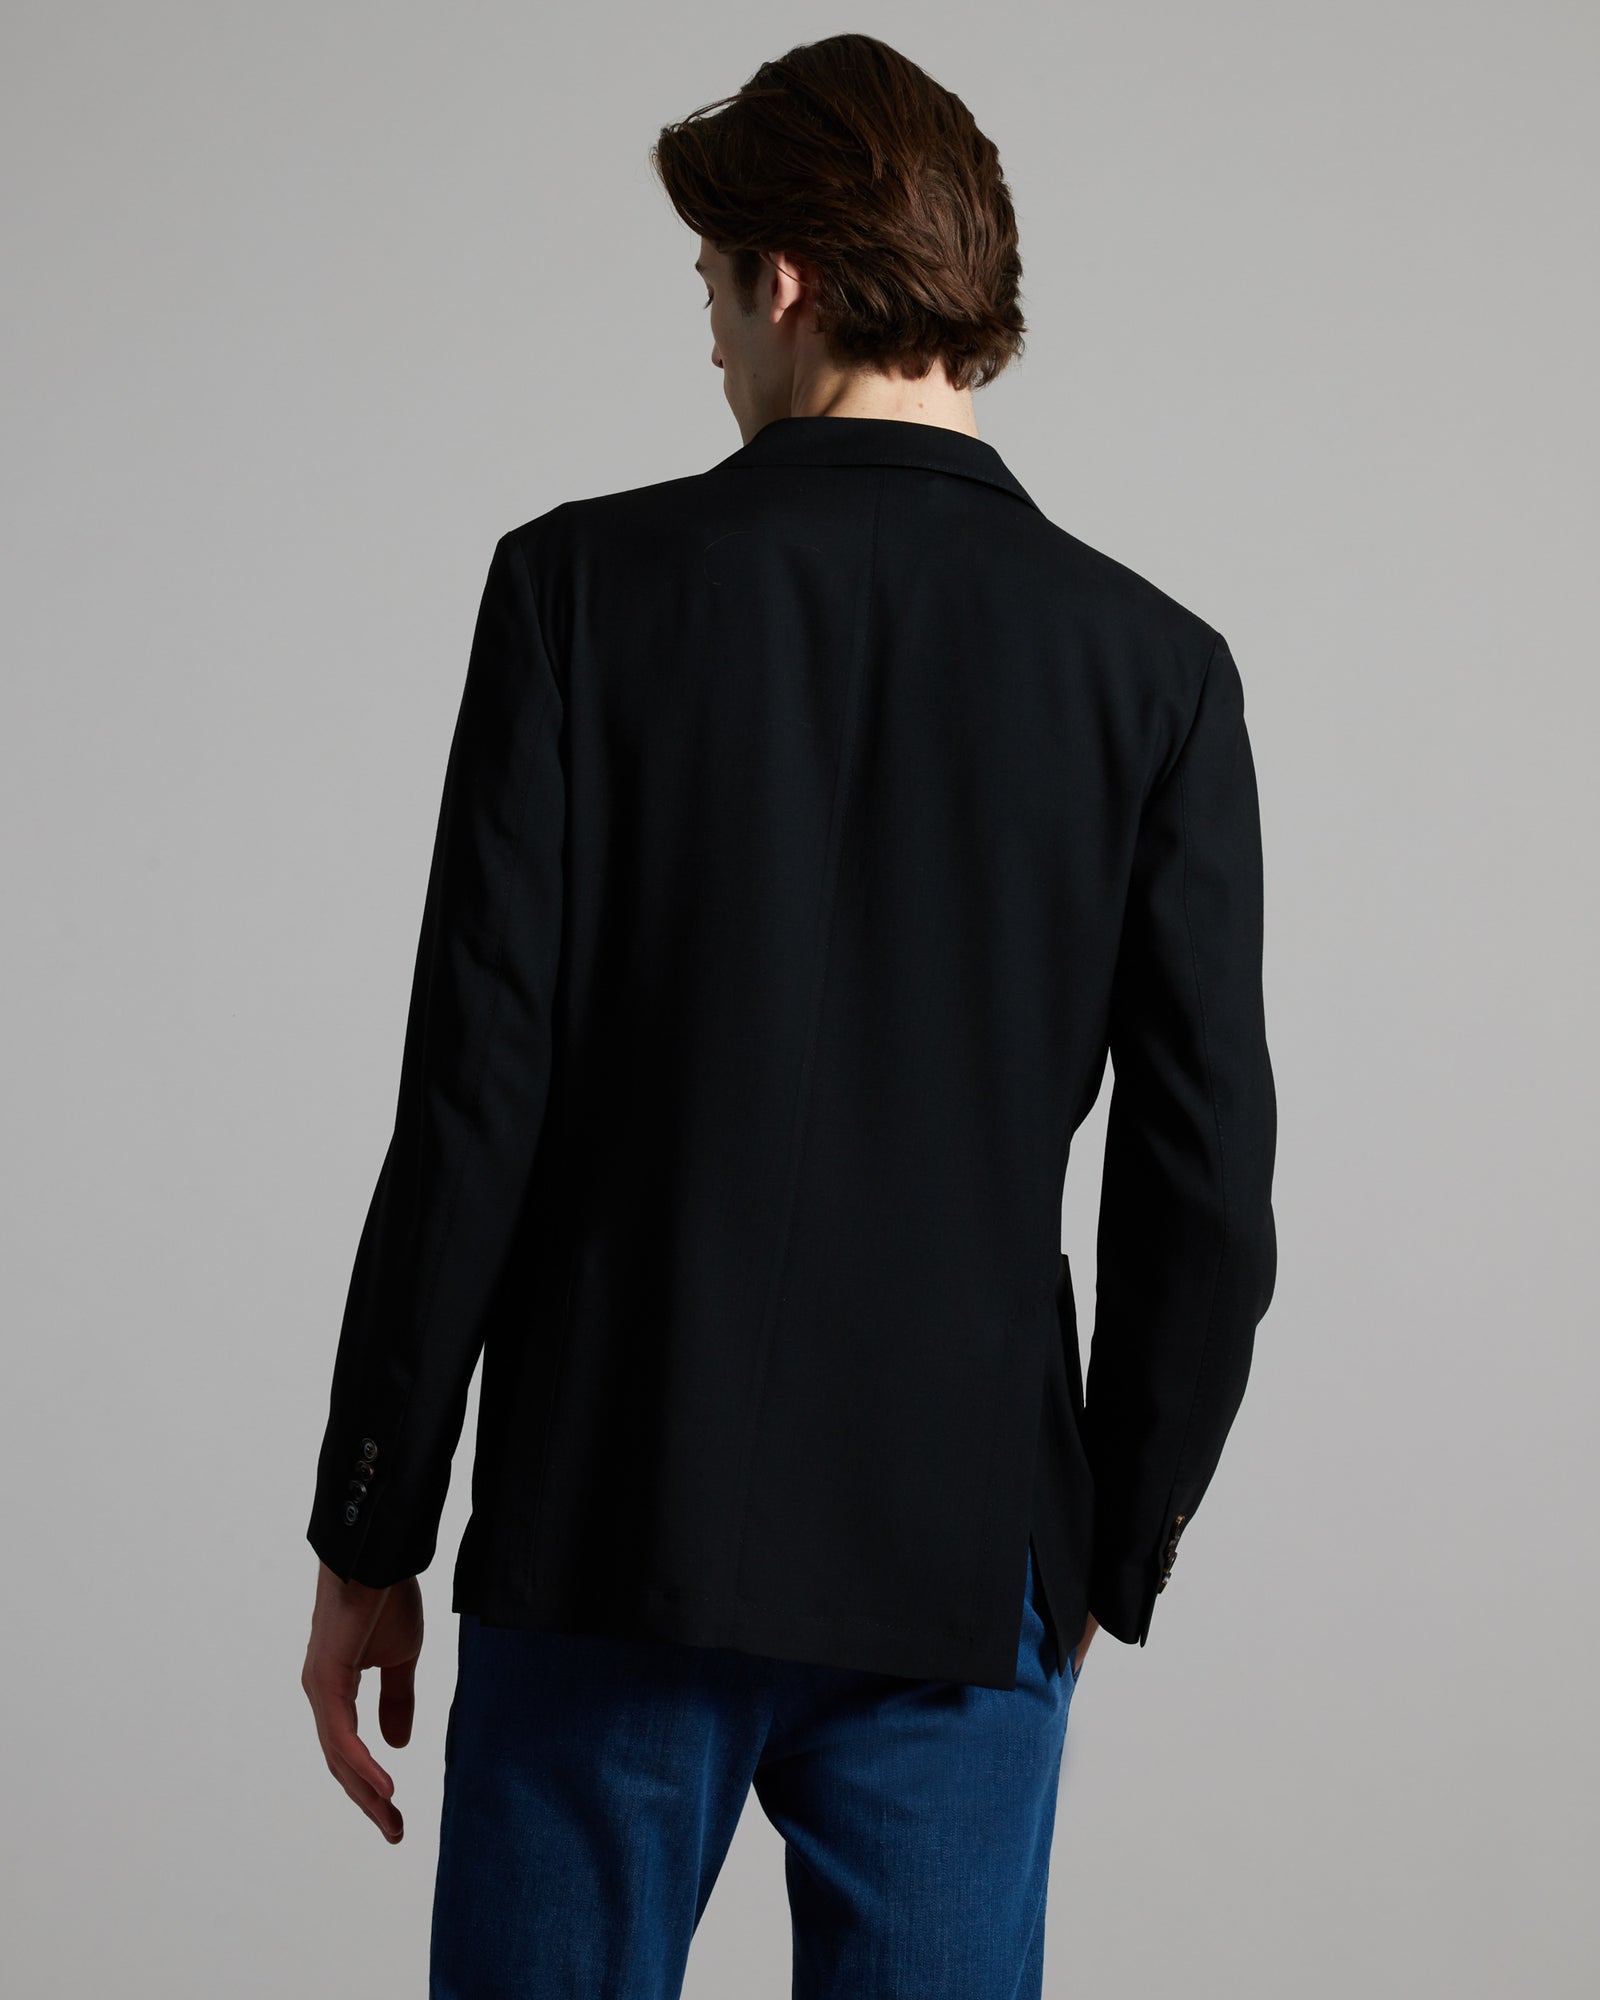 Cashmere 4.0 black ROBERT blazer.